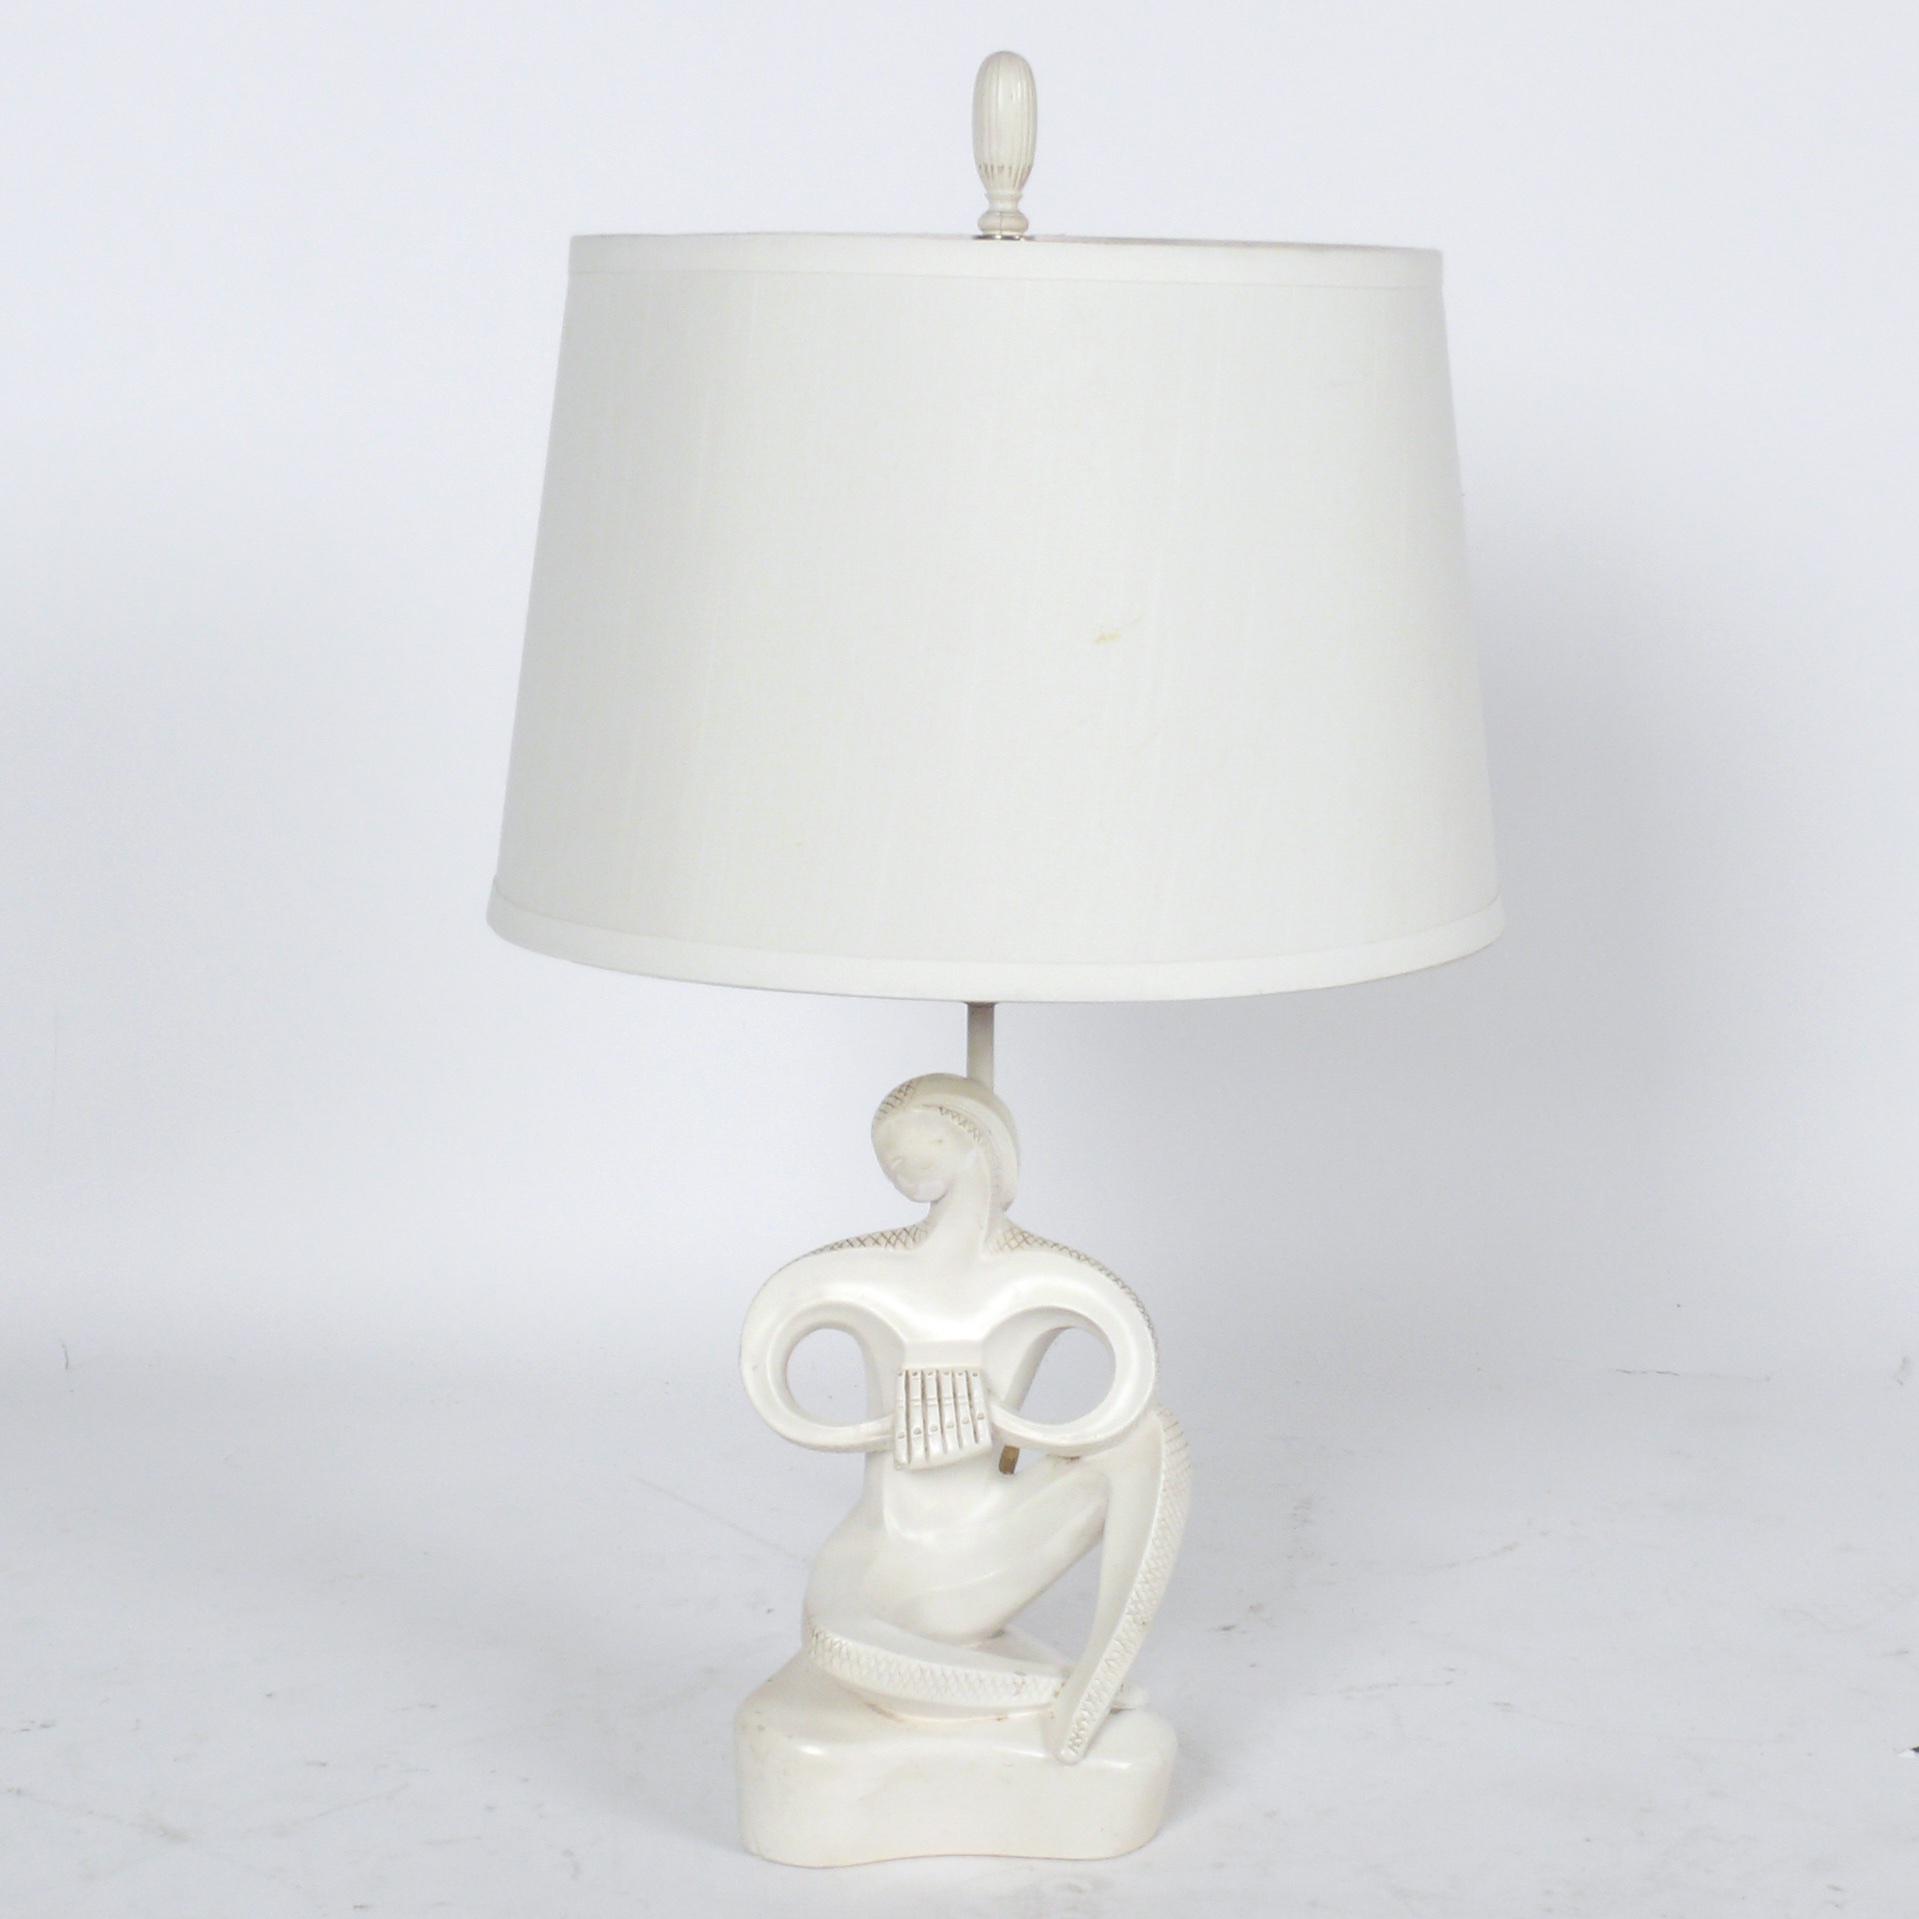 Chalkware Lamp 21 At City Issue Atlanta, Sloth Table Lamp Pillowfort